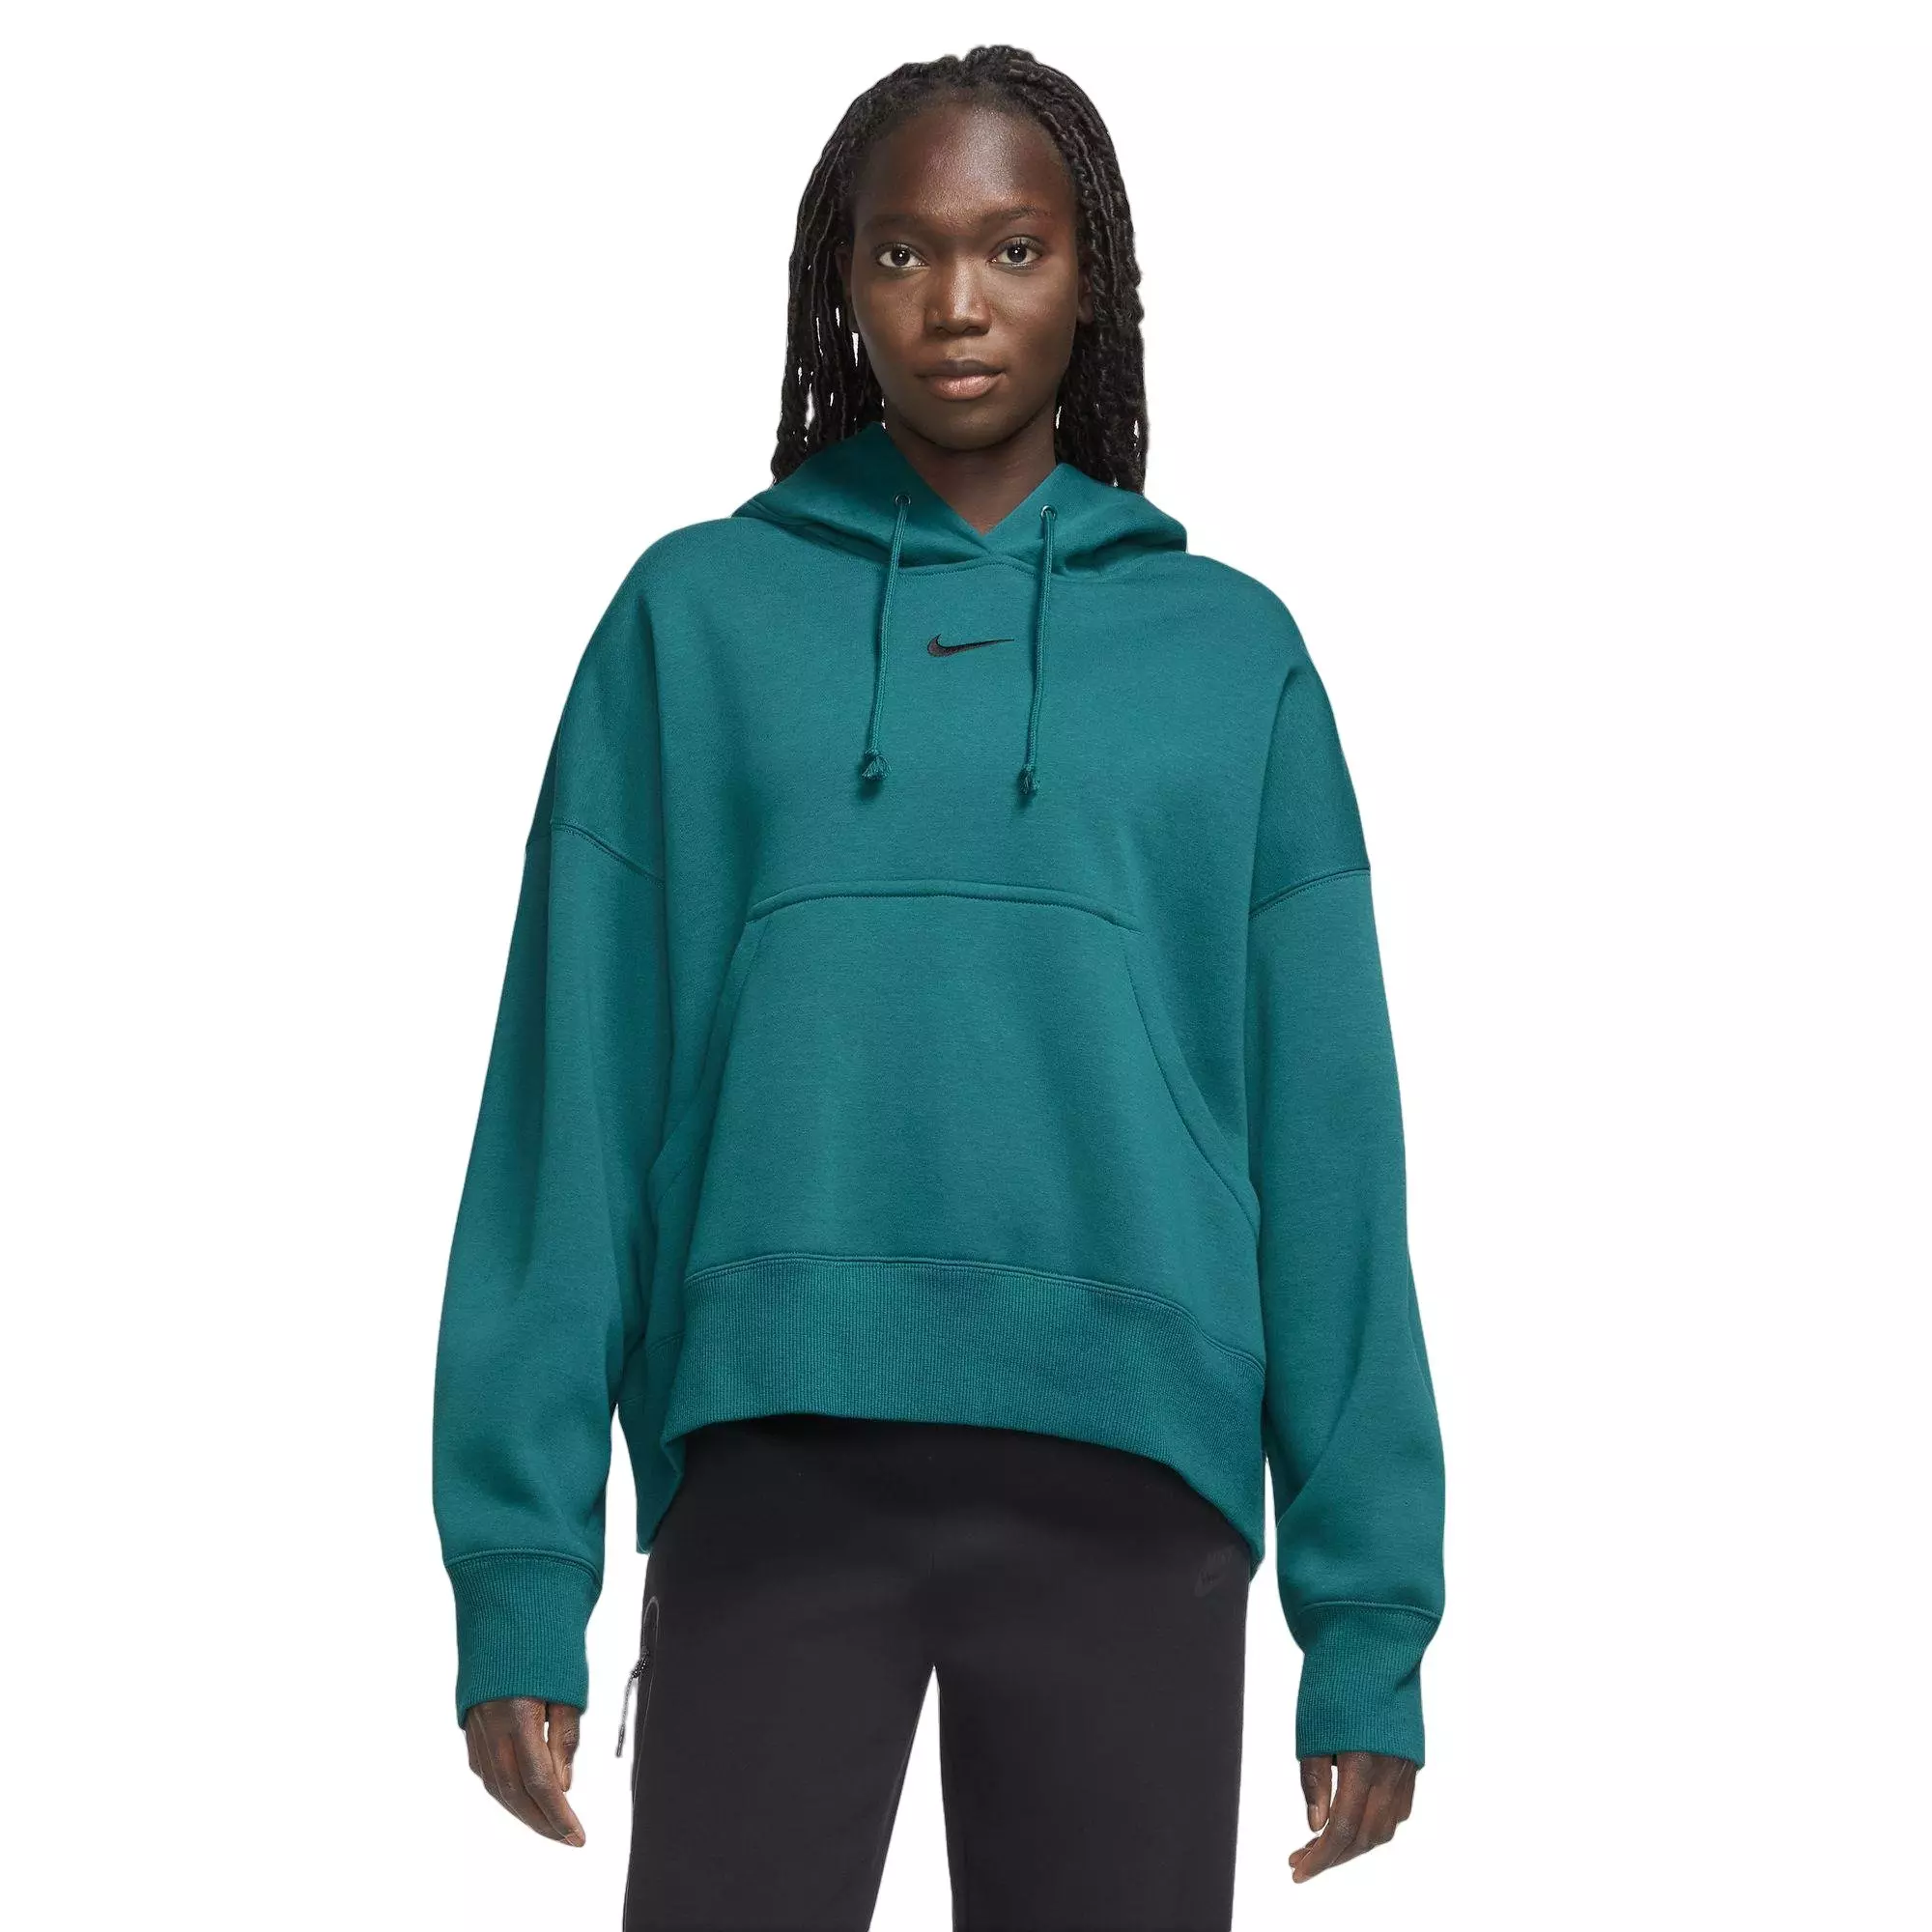 Nike Women's Phoenix Fleece Oversized Hoodie - Geode Teal